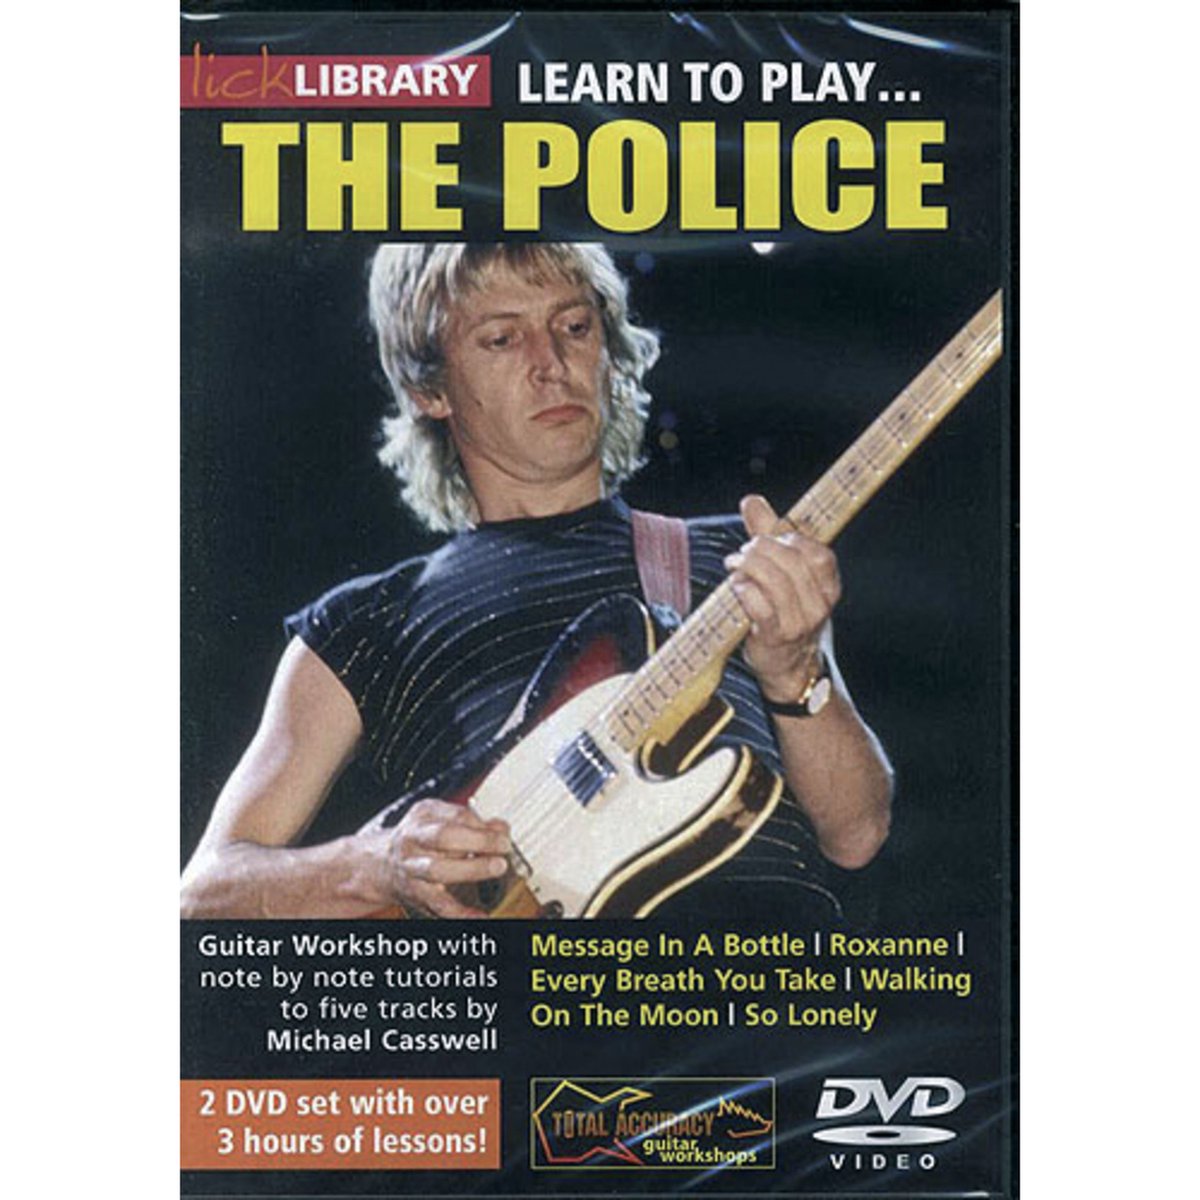 Roadrock International Lick Library - The Police Learn to play (gitaar), DVD - DVD / CD / Multimedia: O - P